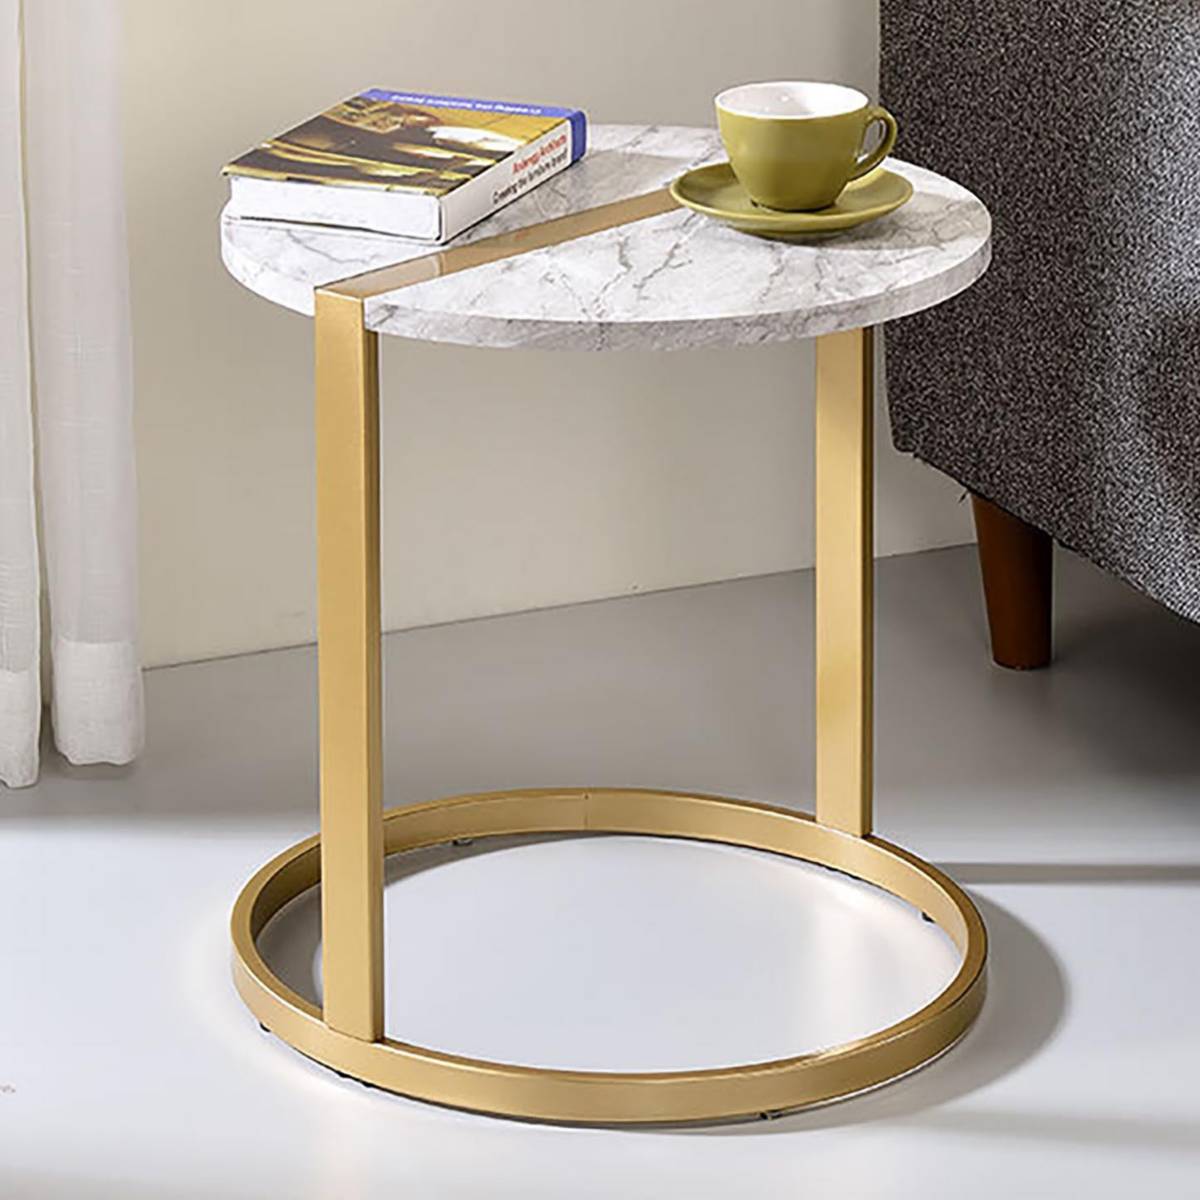 End Tables - Side Table Designs | Lamps Plus